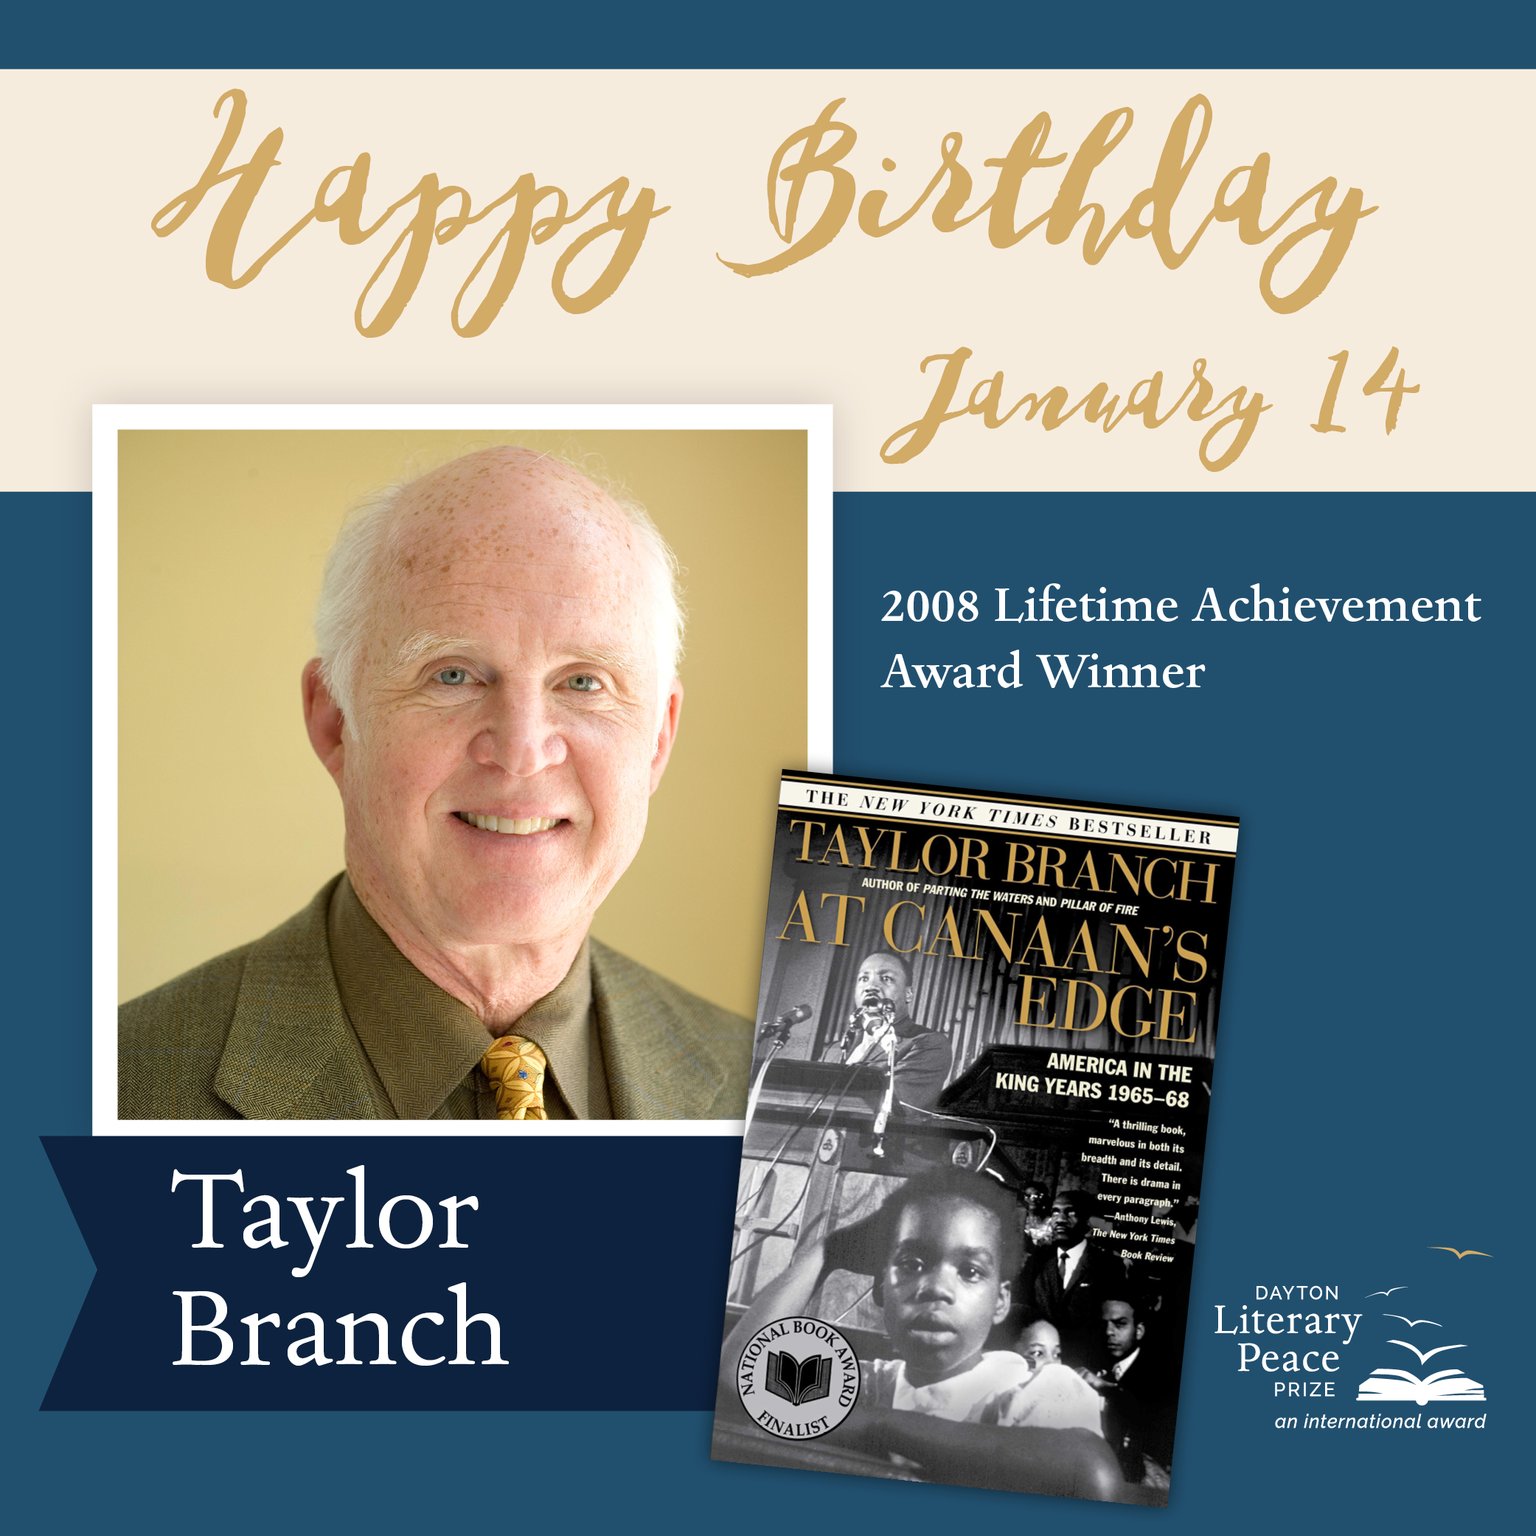 Happy Birthday to the Dayton Literary Peace Prize 2008 Lifetime Achievement Award Winner Taylor Branch! 